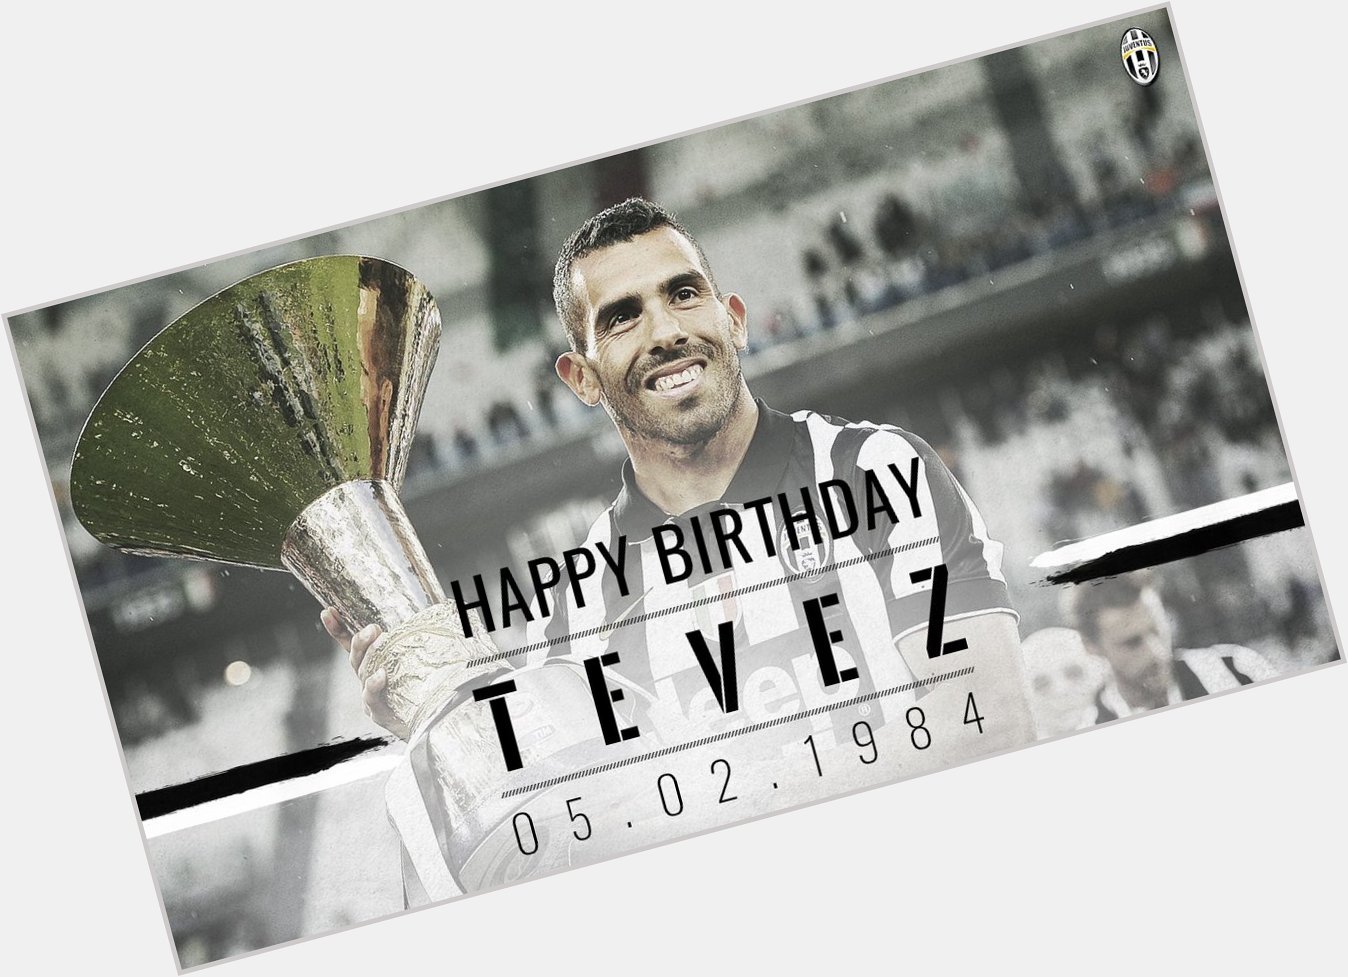 50 goals in 2 unforgettable seasons. 

Happy birthday, Carlos Tevez!        